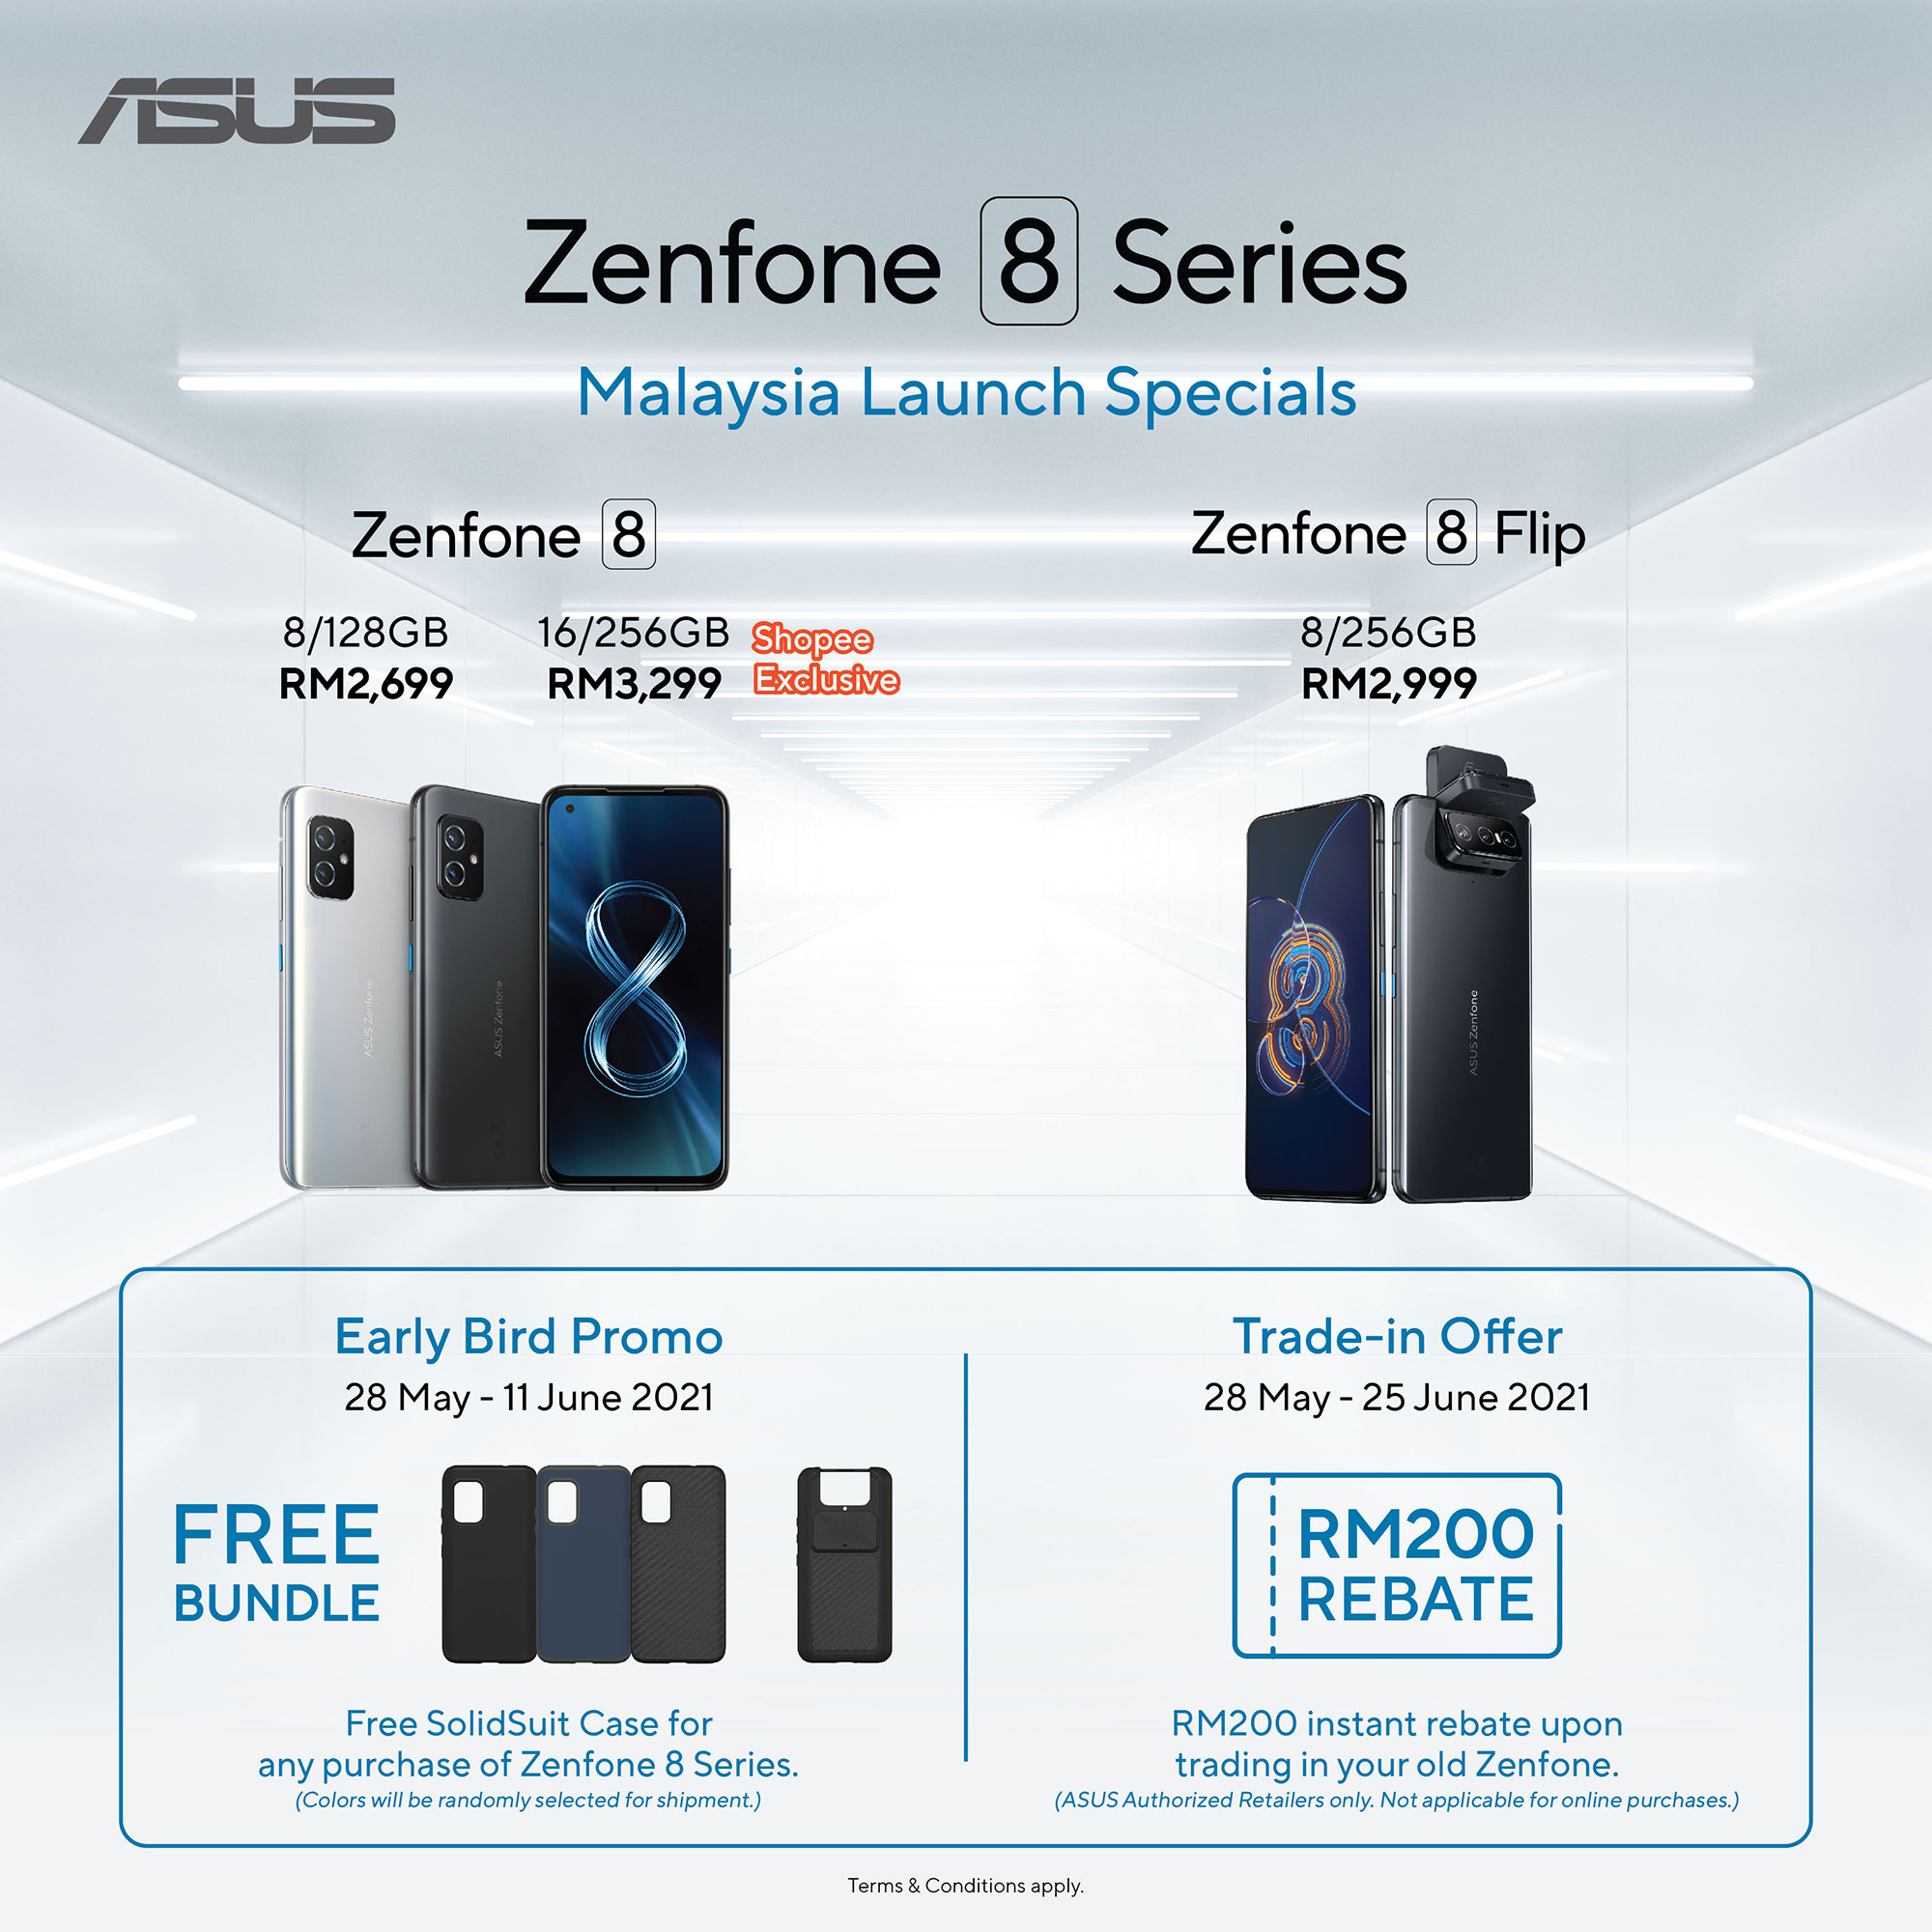 ASUS Zenfone 8 Series Malaysia